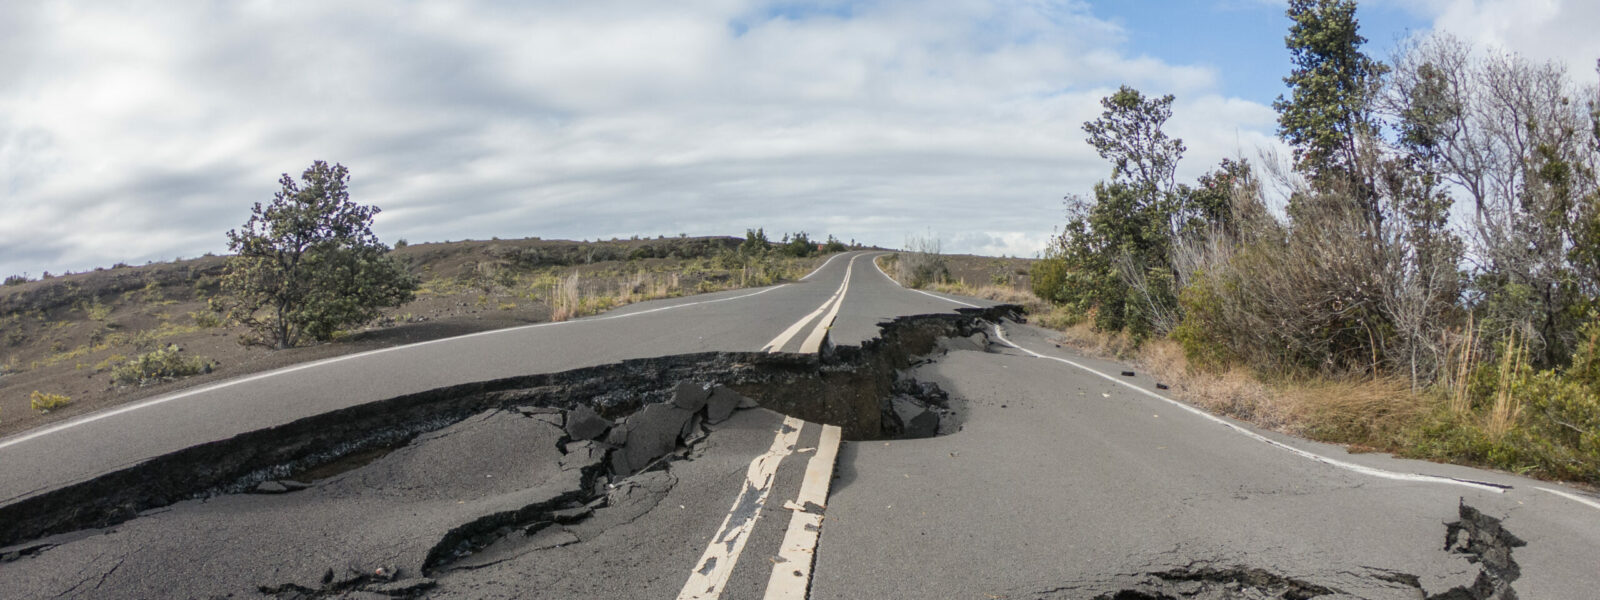 Cracked road from volcano activity in Volcano national park, Hawaii